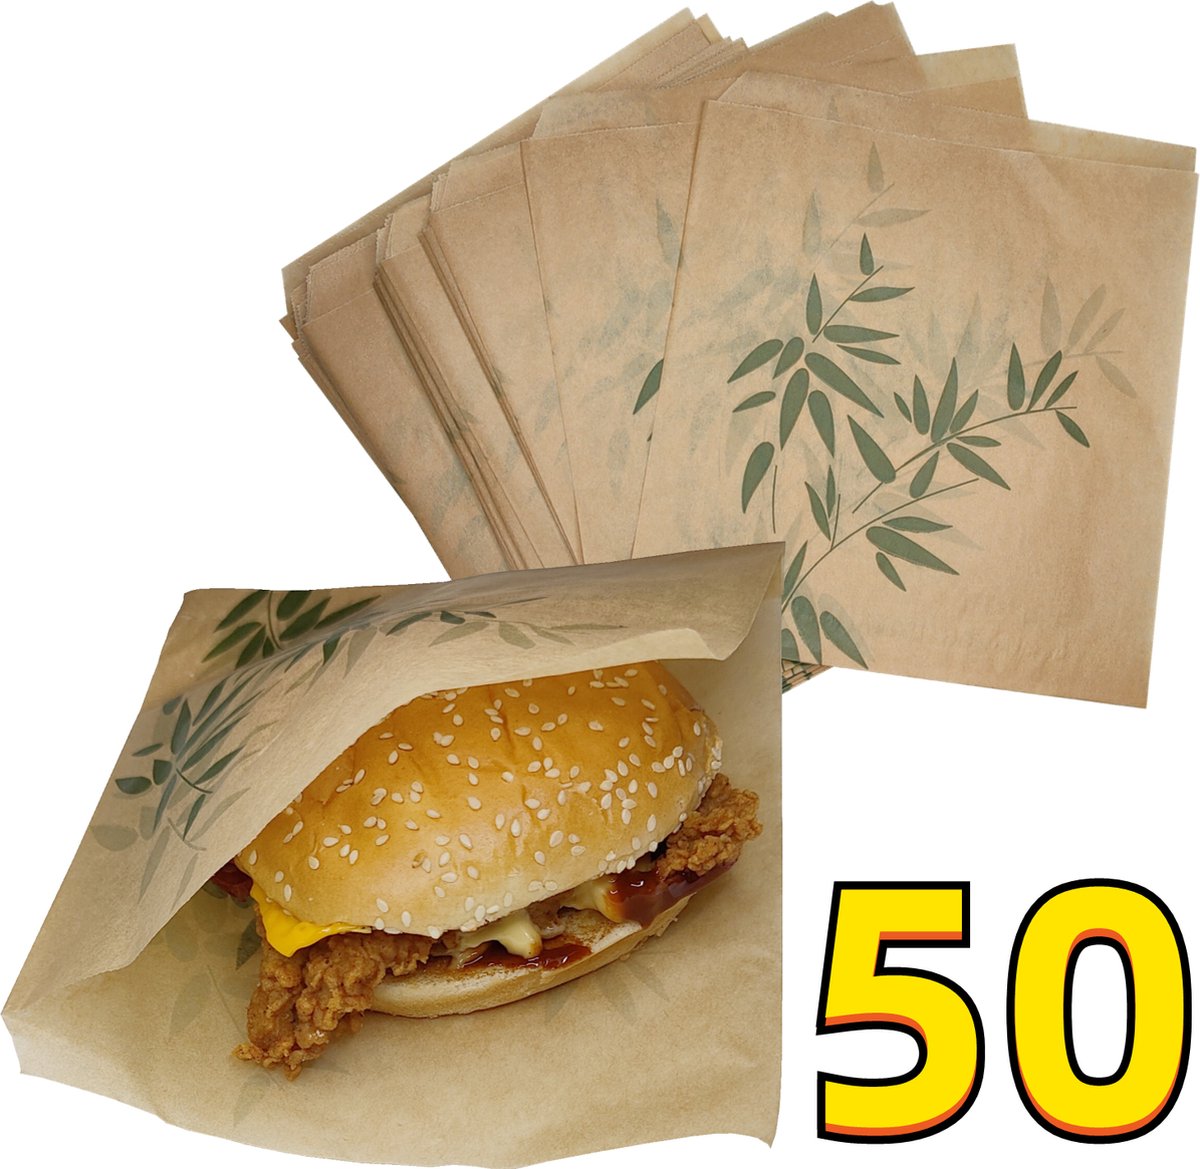 Rainbecom - 50 Stuks - 19 x 17 cm - Hamburger Zakje Papier - Vetvrij Papier - Papieren Zak voor Sandwiches - Bamboe